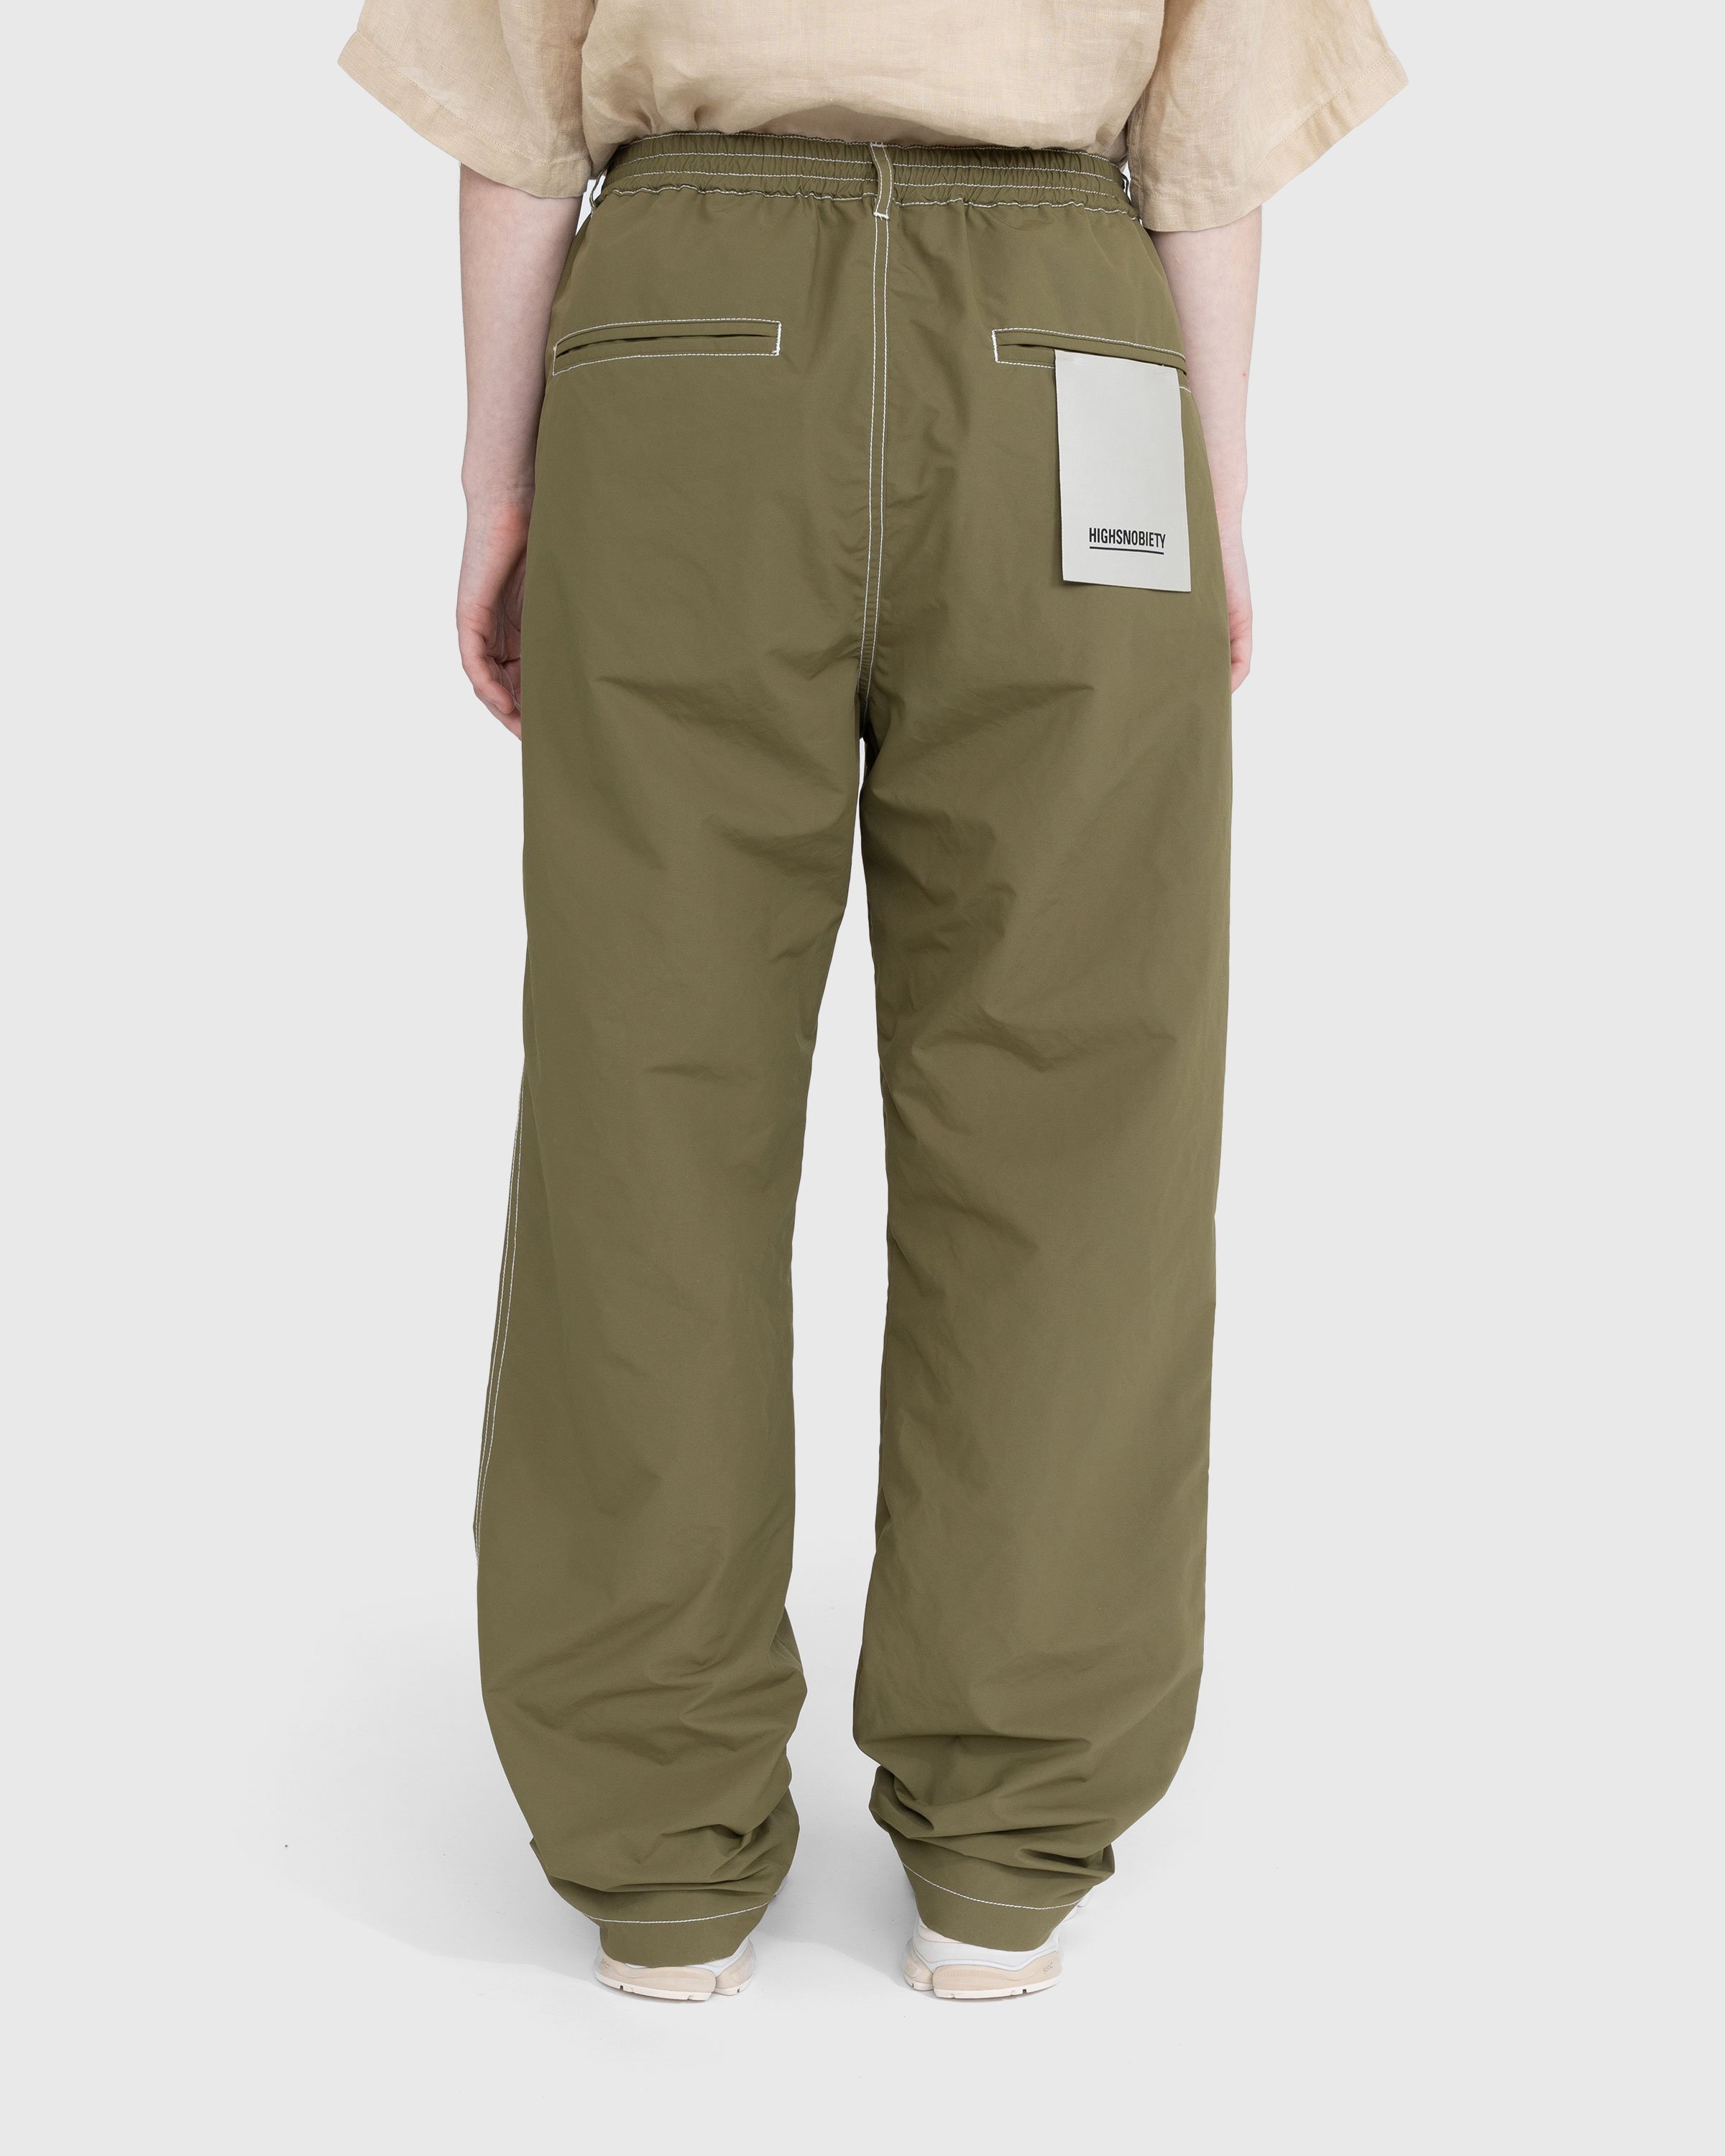 Highsnobiety - Contrast Stitch Pants Khaki - Clothing - Green - Image 5